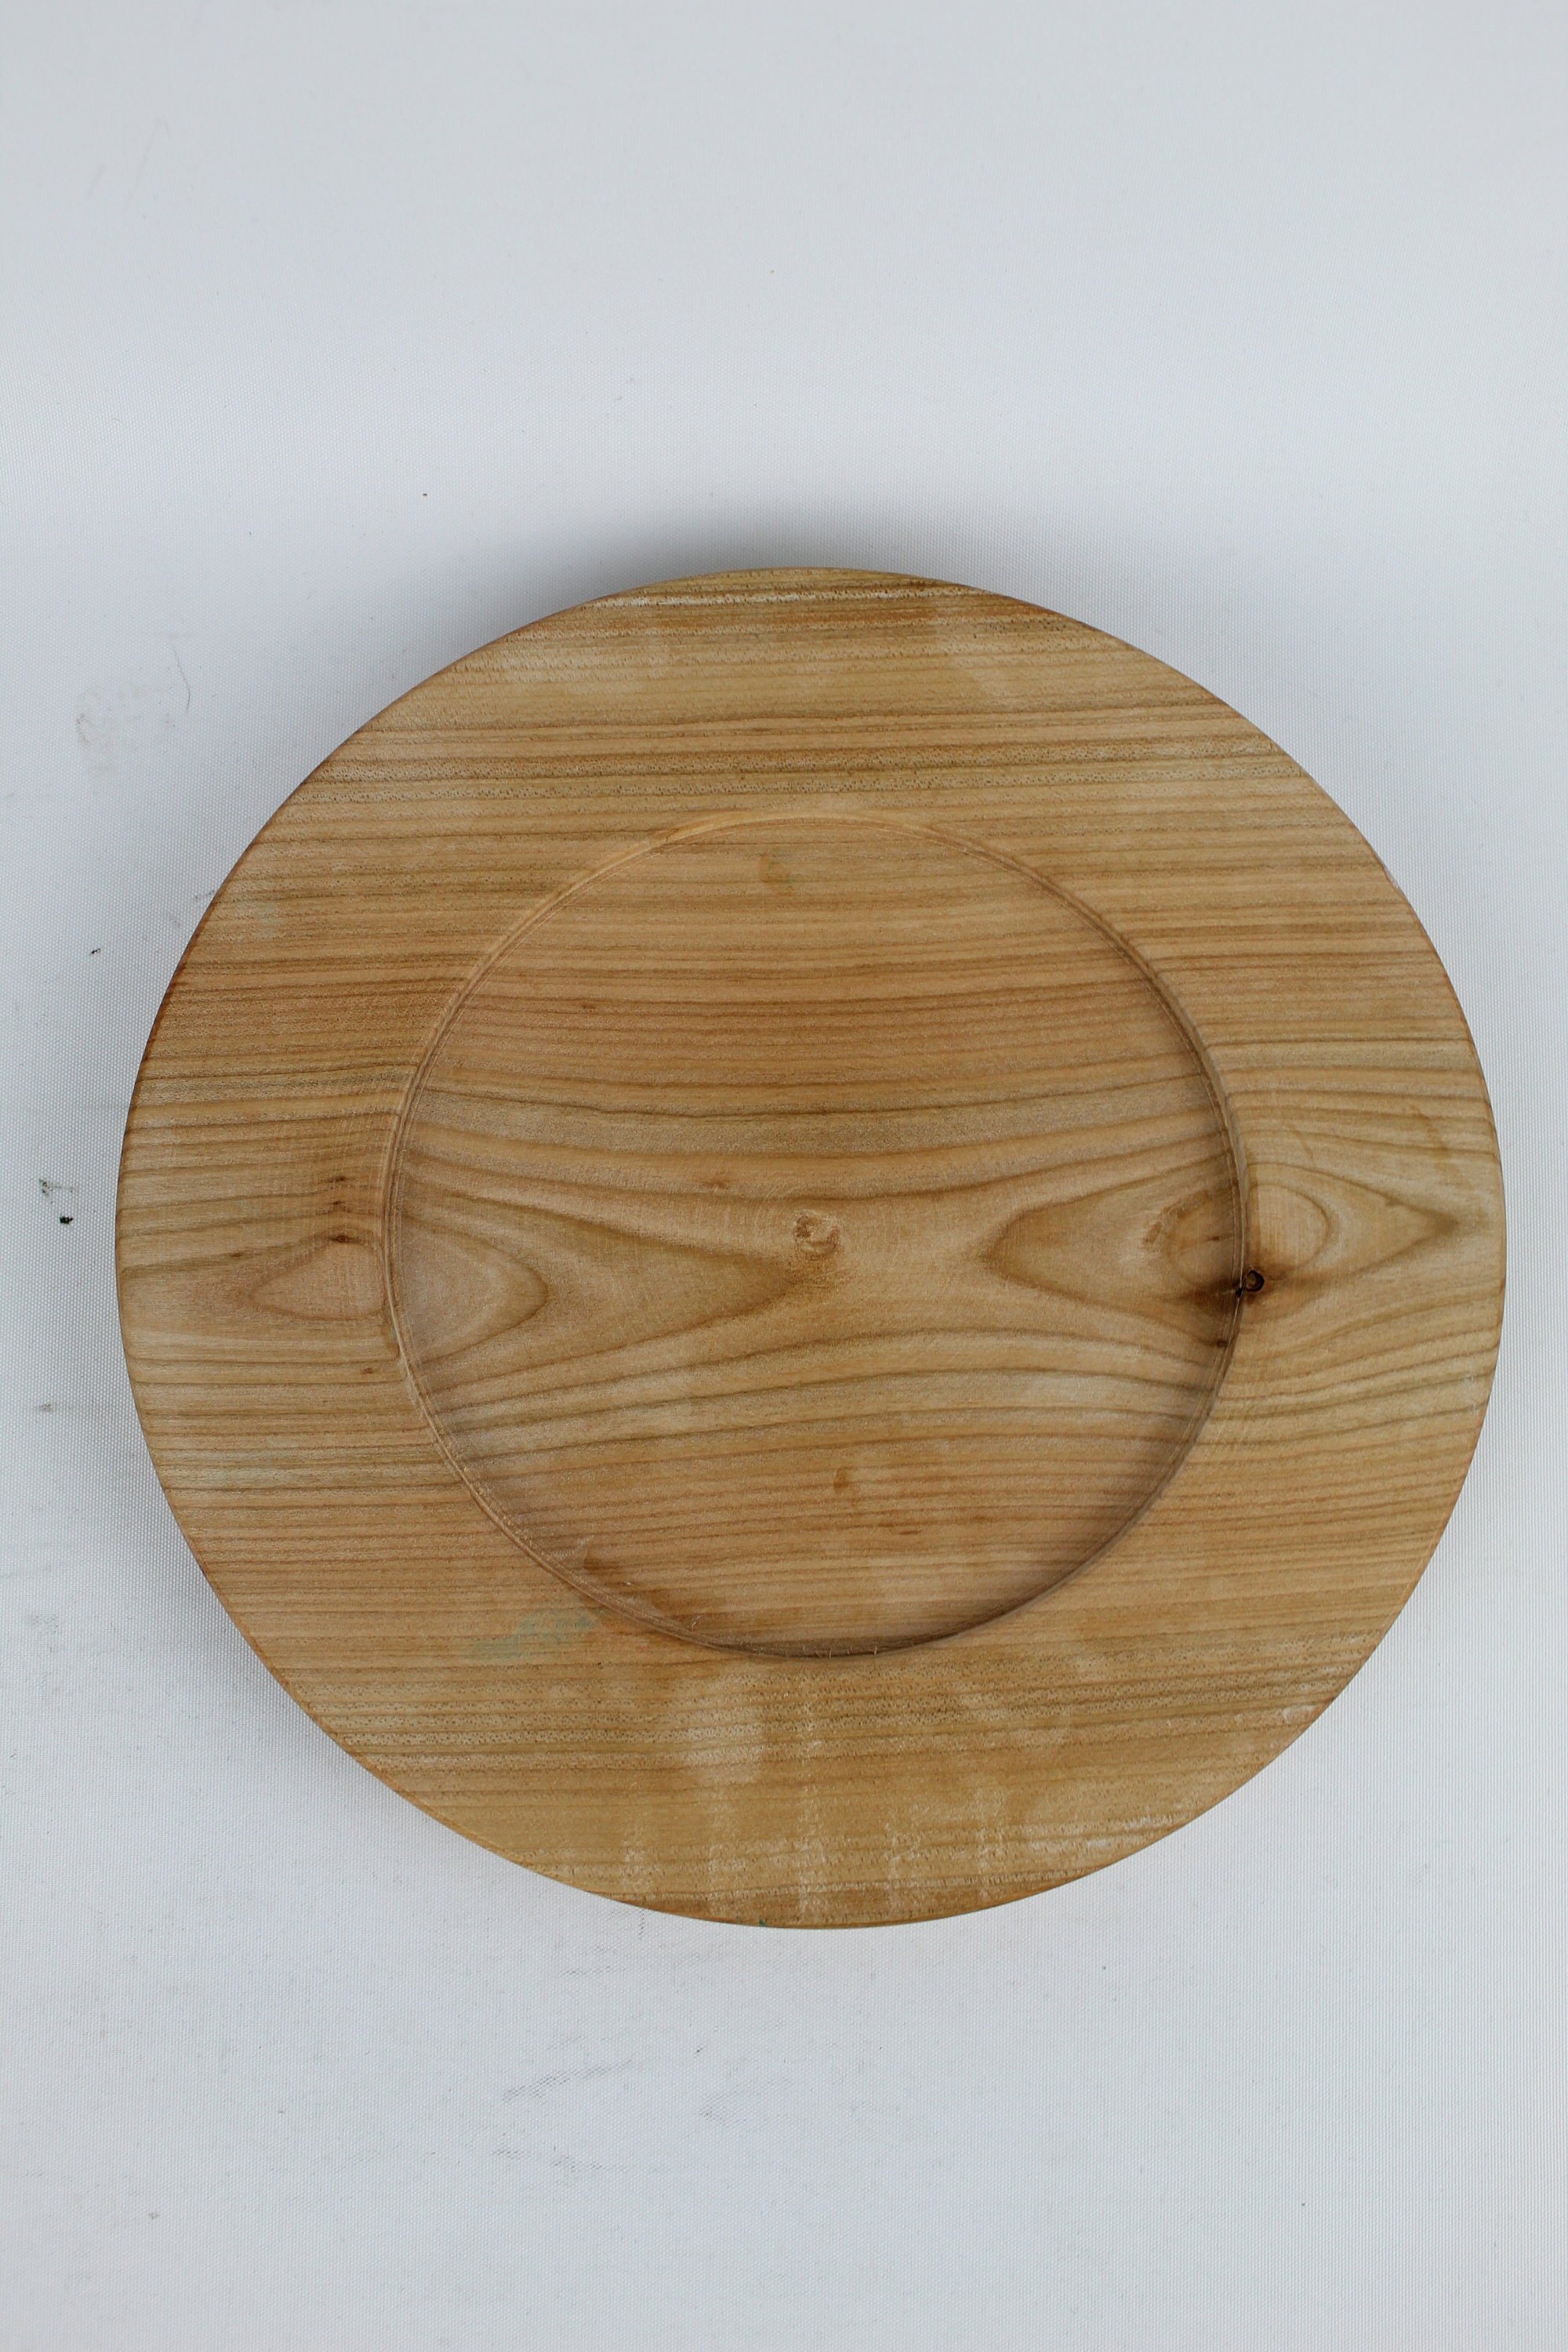 Wooden serving board Pride&Joy round cheese board handle | Etsy